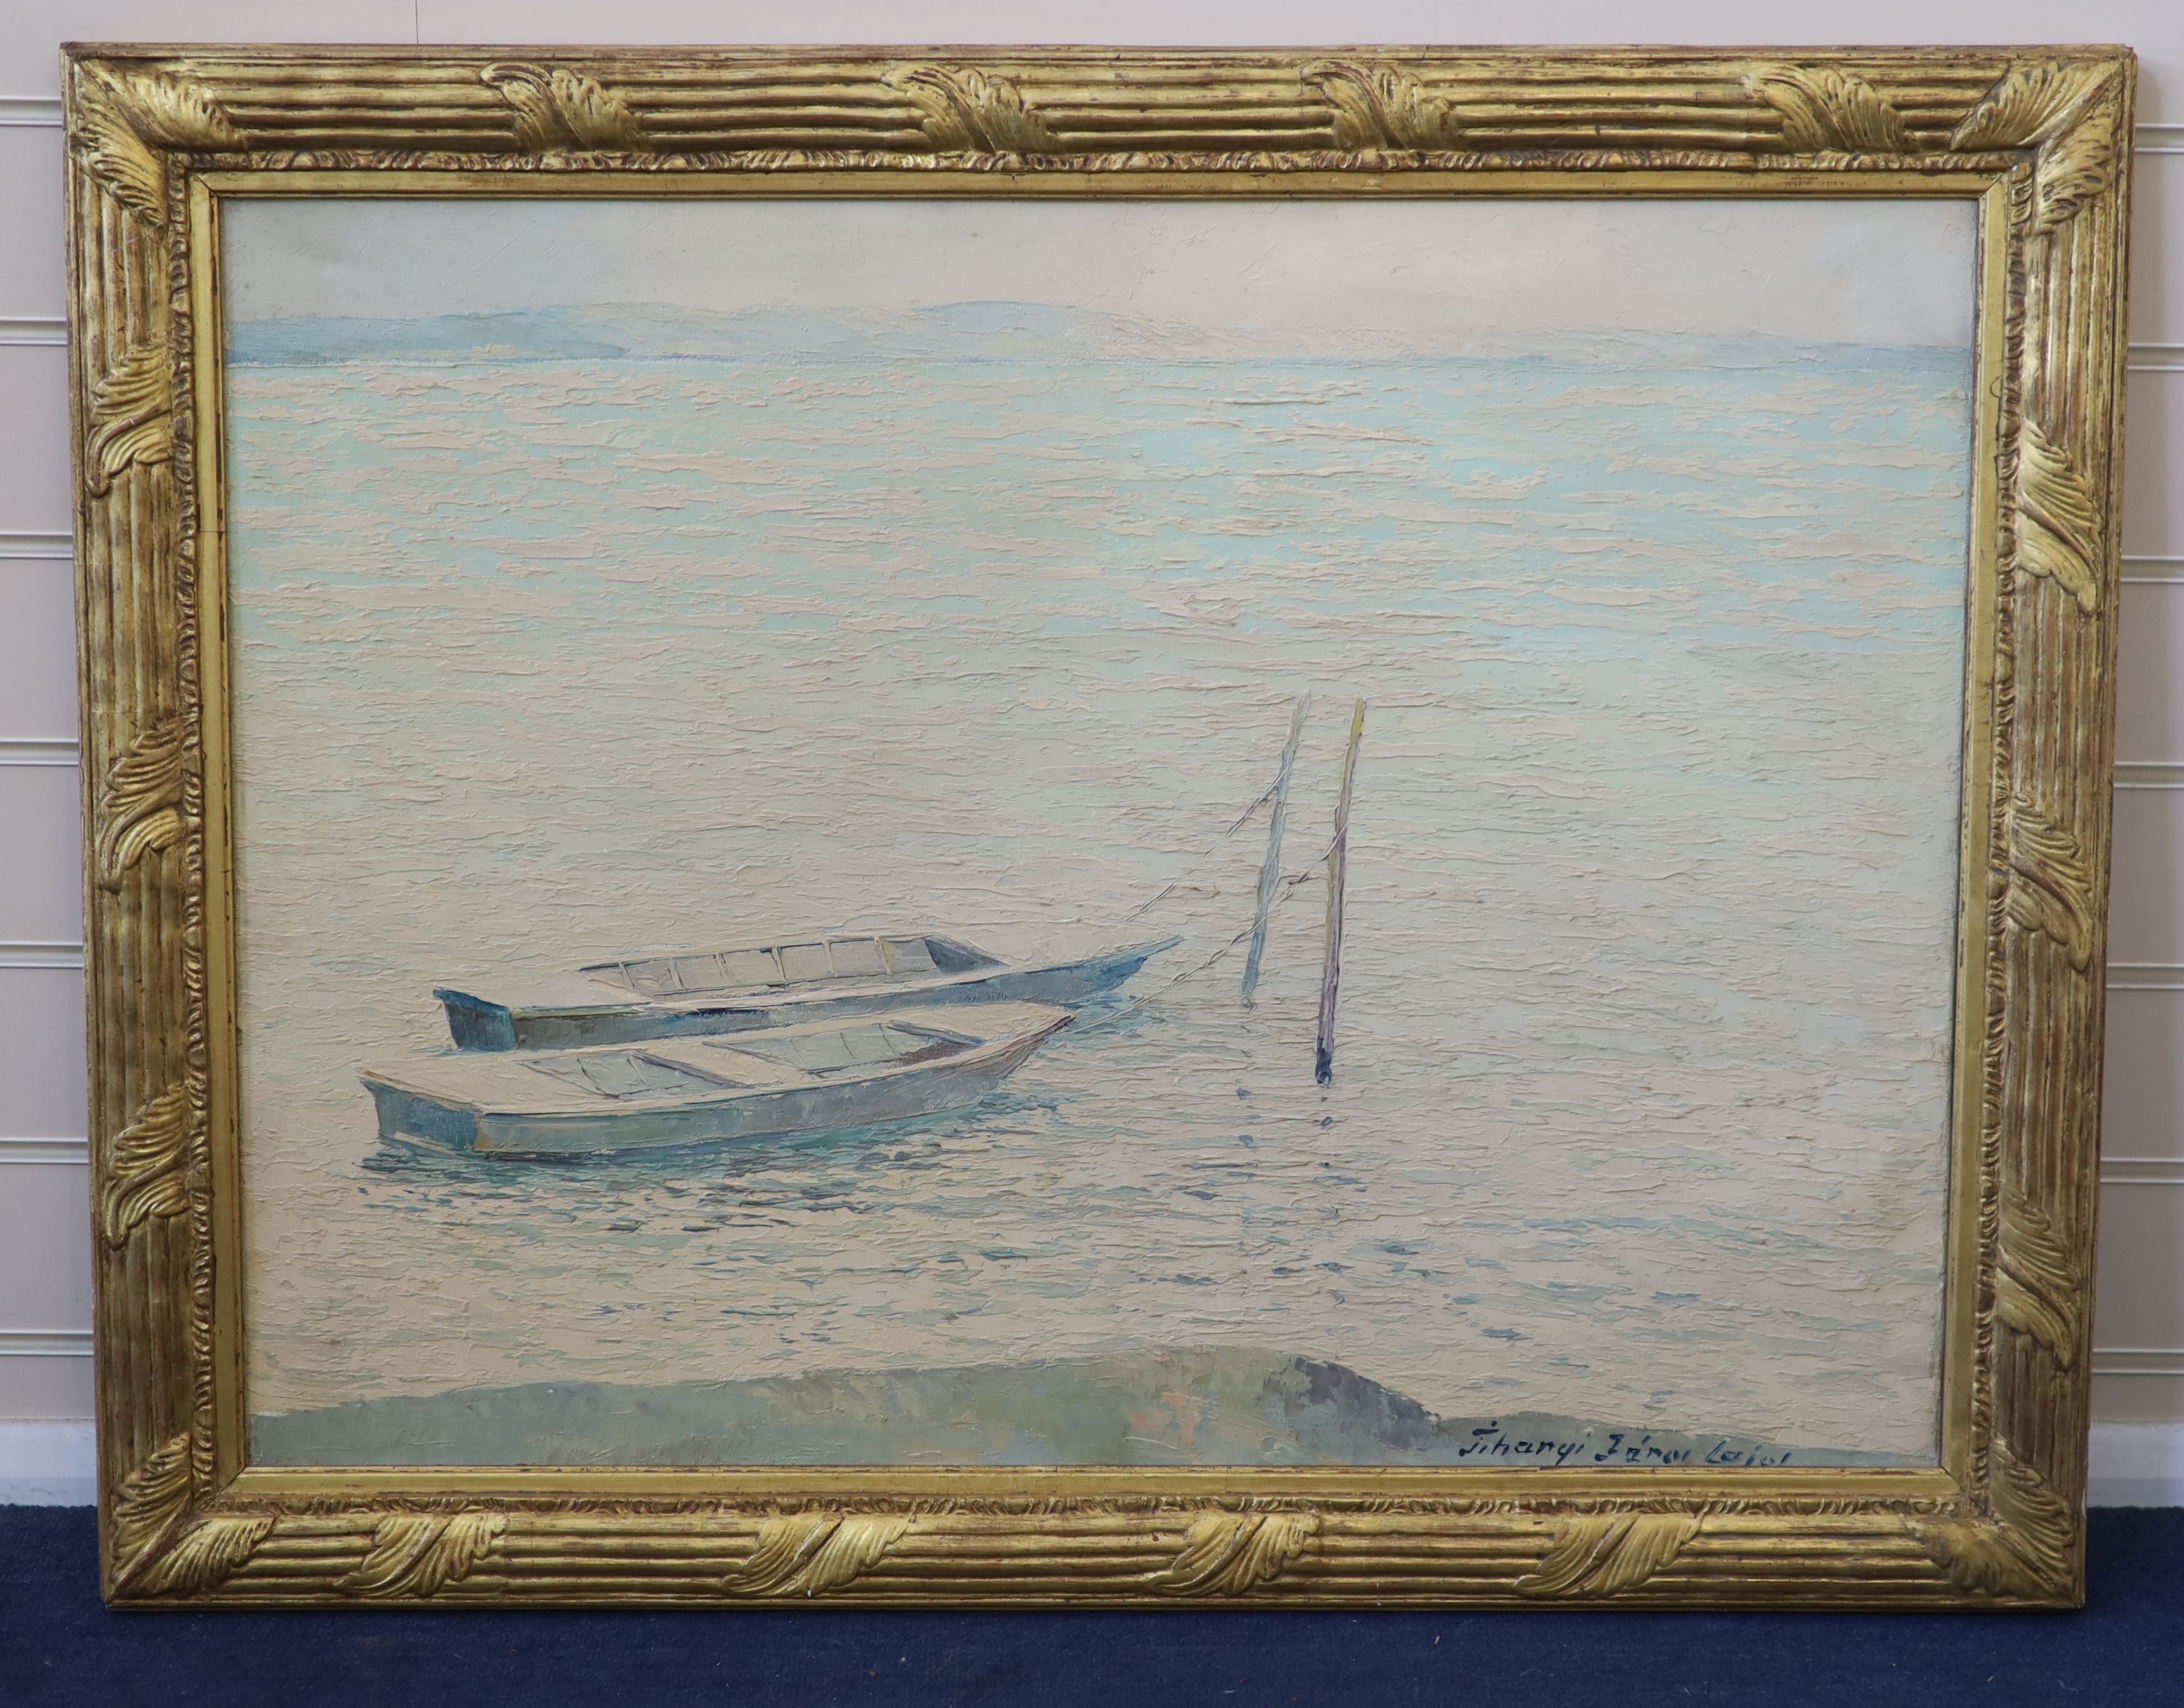 János Lajos Tihanyi (Hungarian, 1892-1957), Fishing boats on a calm sea, Oil on canvas, 60 x 80cm.